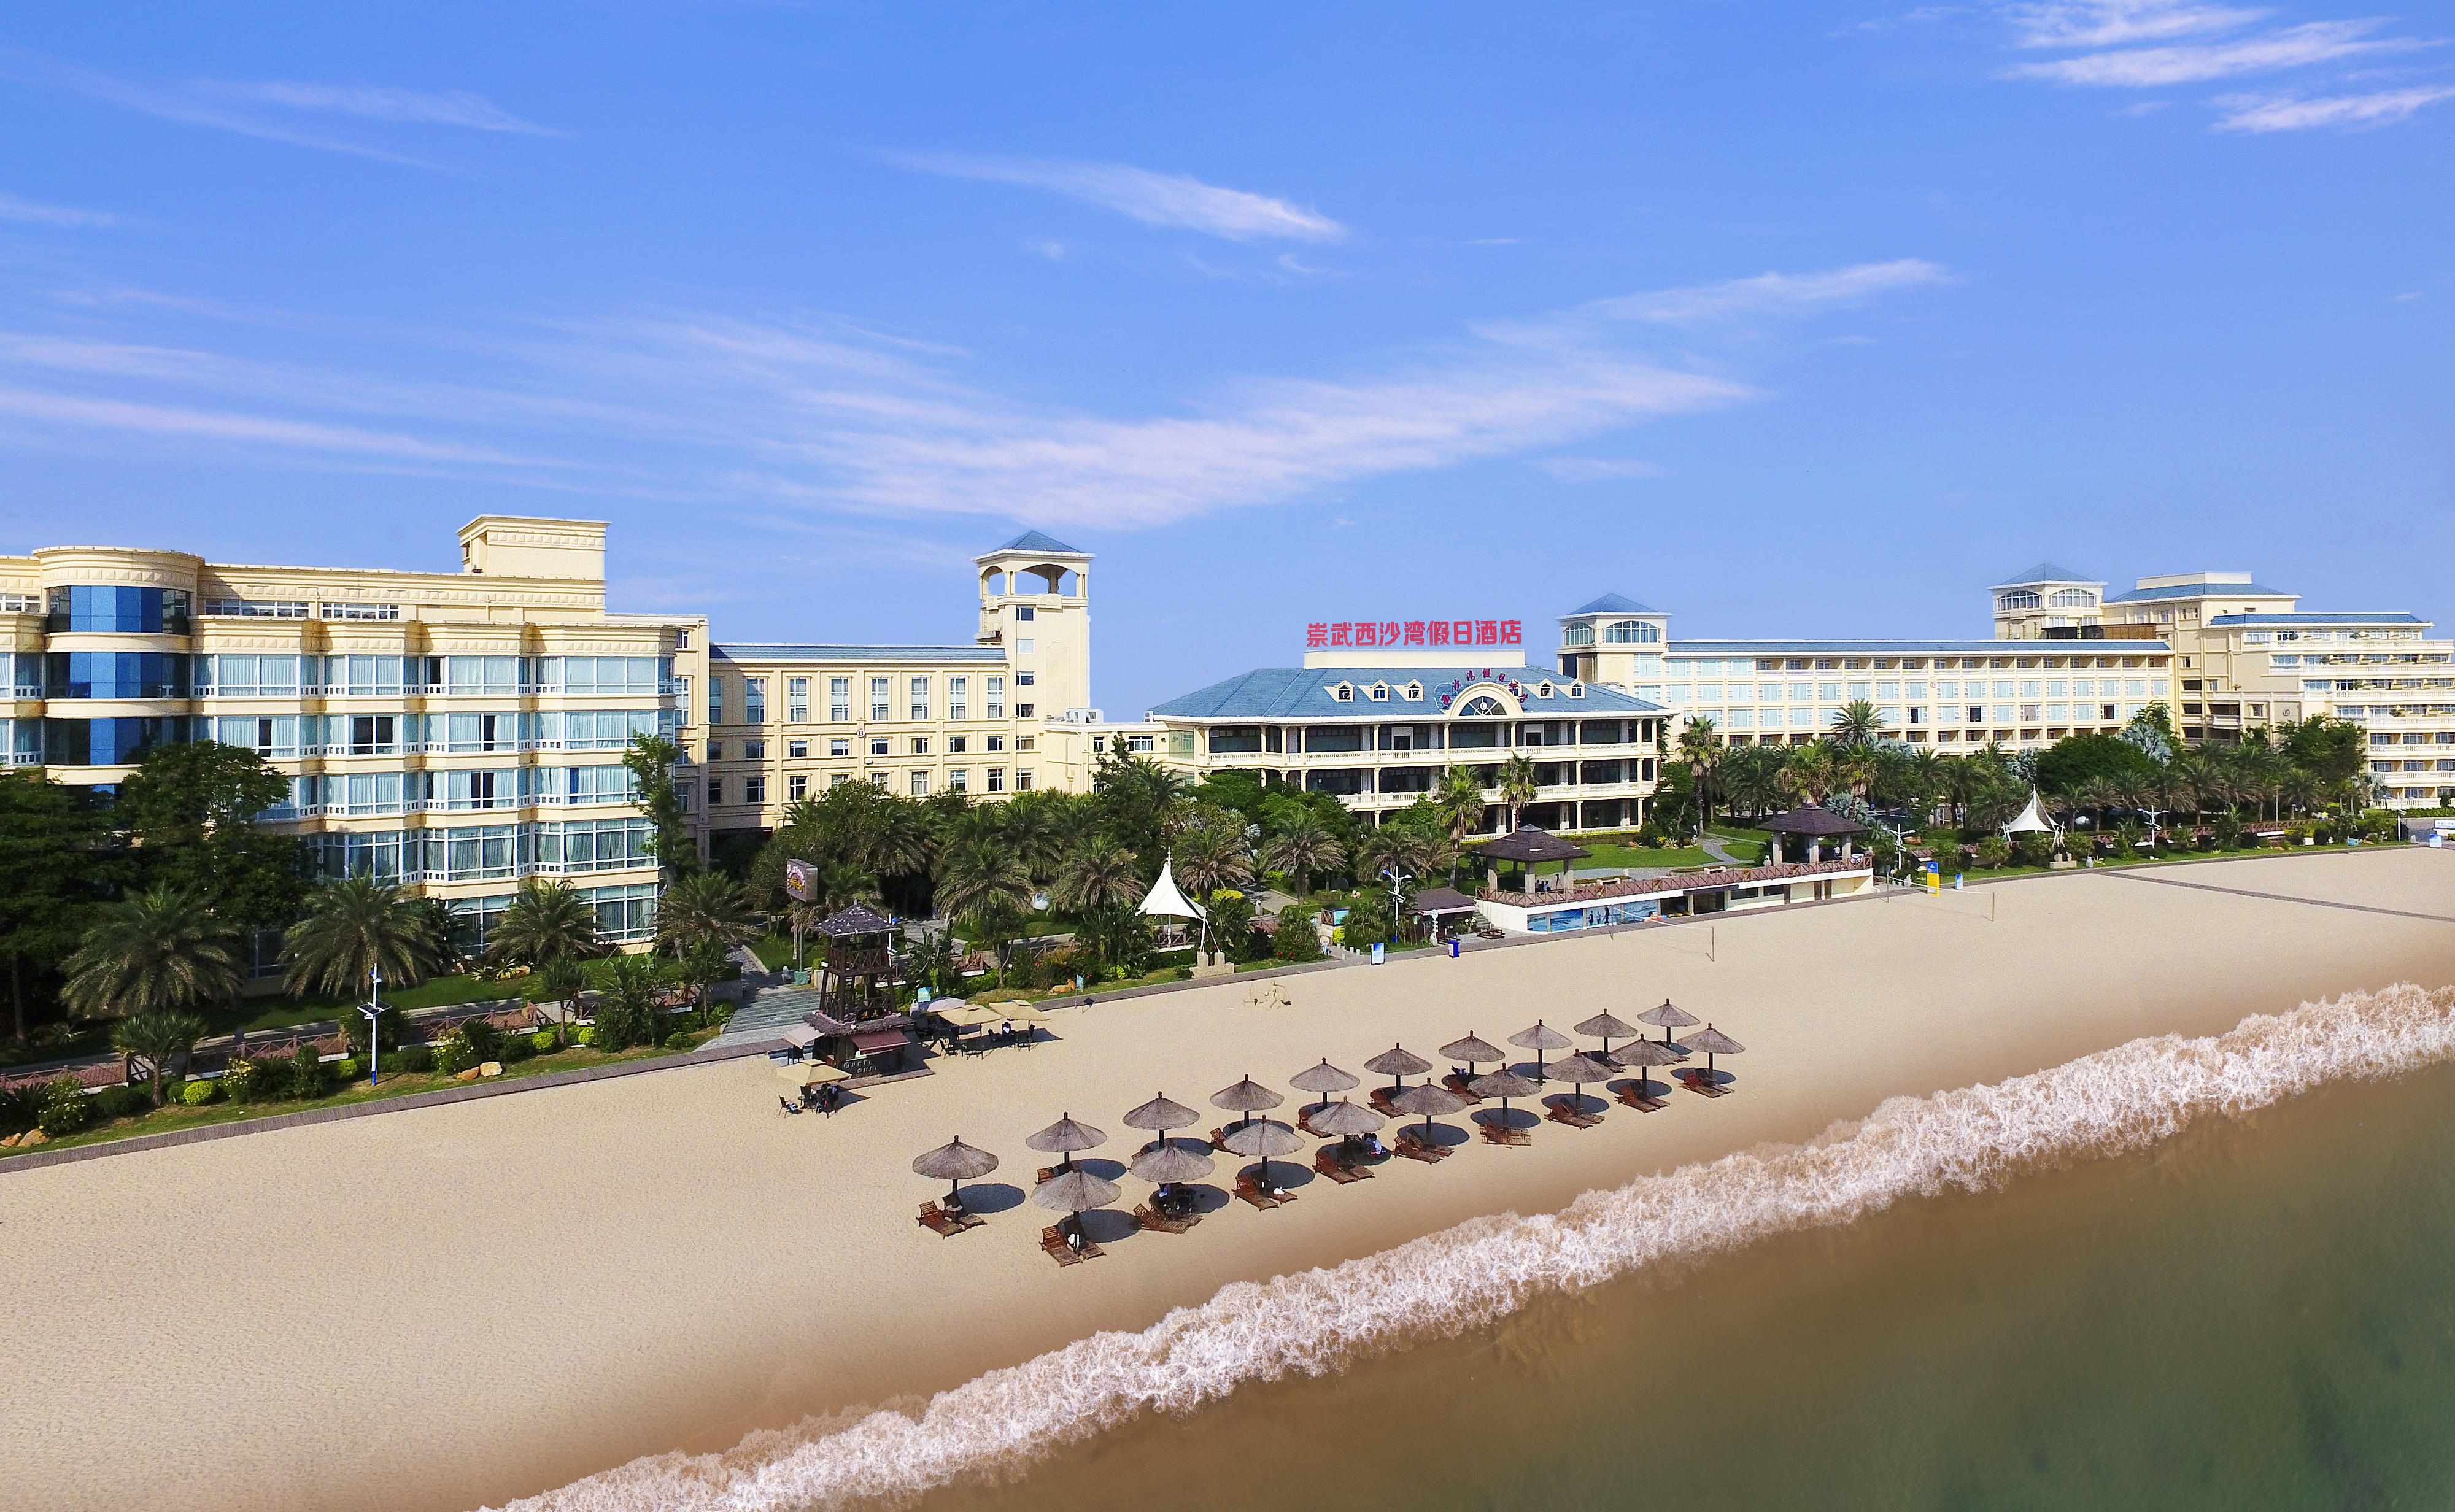 Talk to the sea: JW Marriott Hotel Sanya Dadonghai Bay, China by W&R Group - 谷德设计网